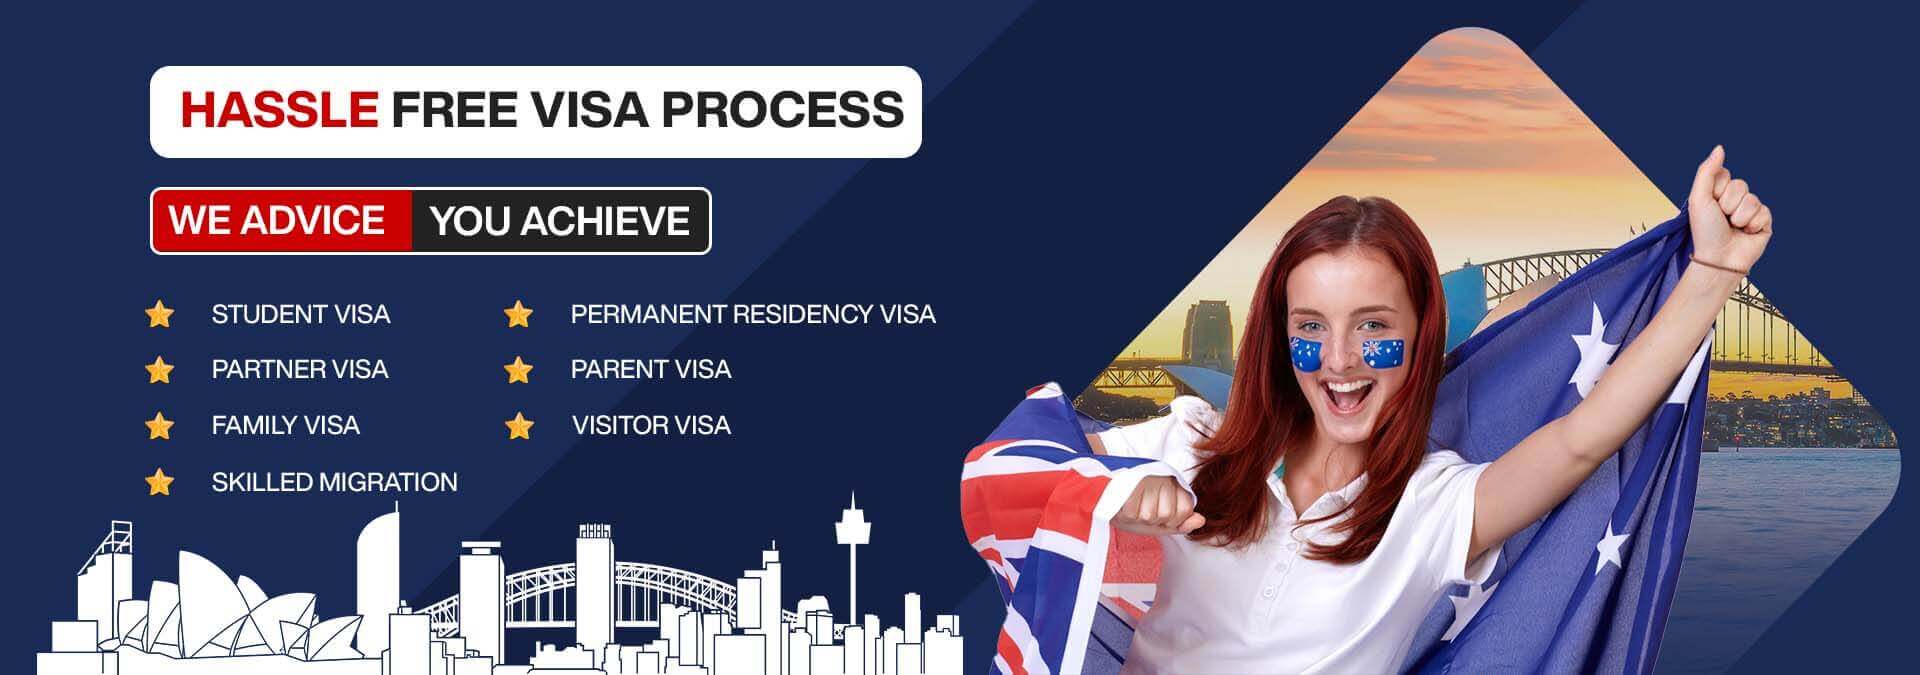 Hassle Free Visa Process